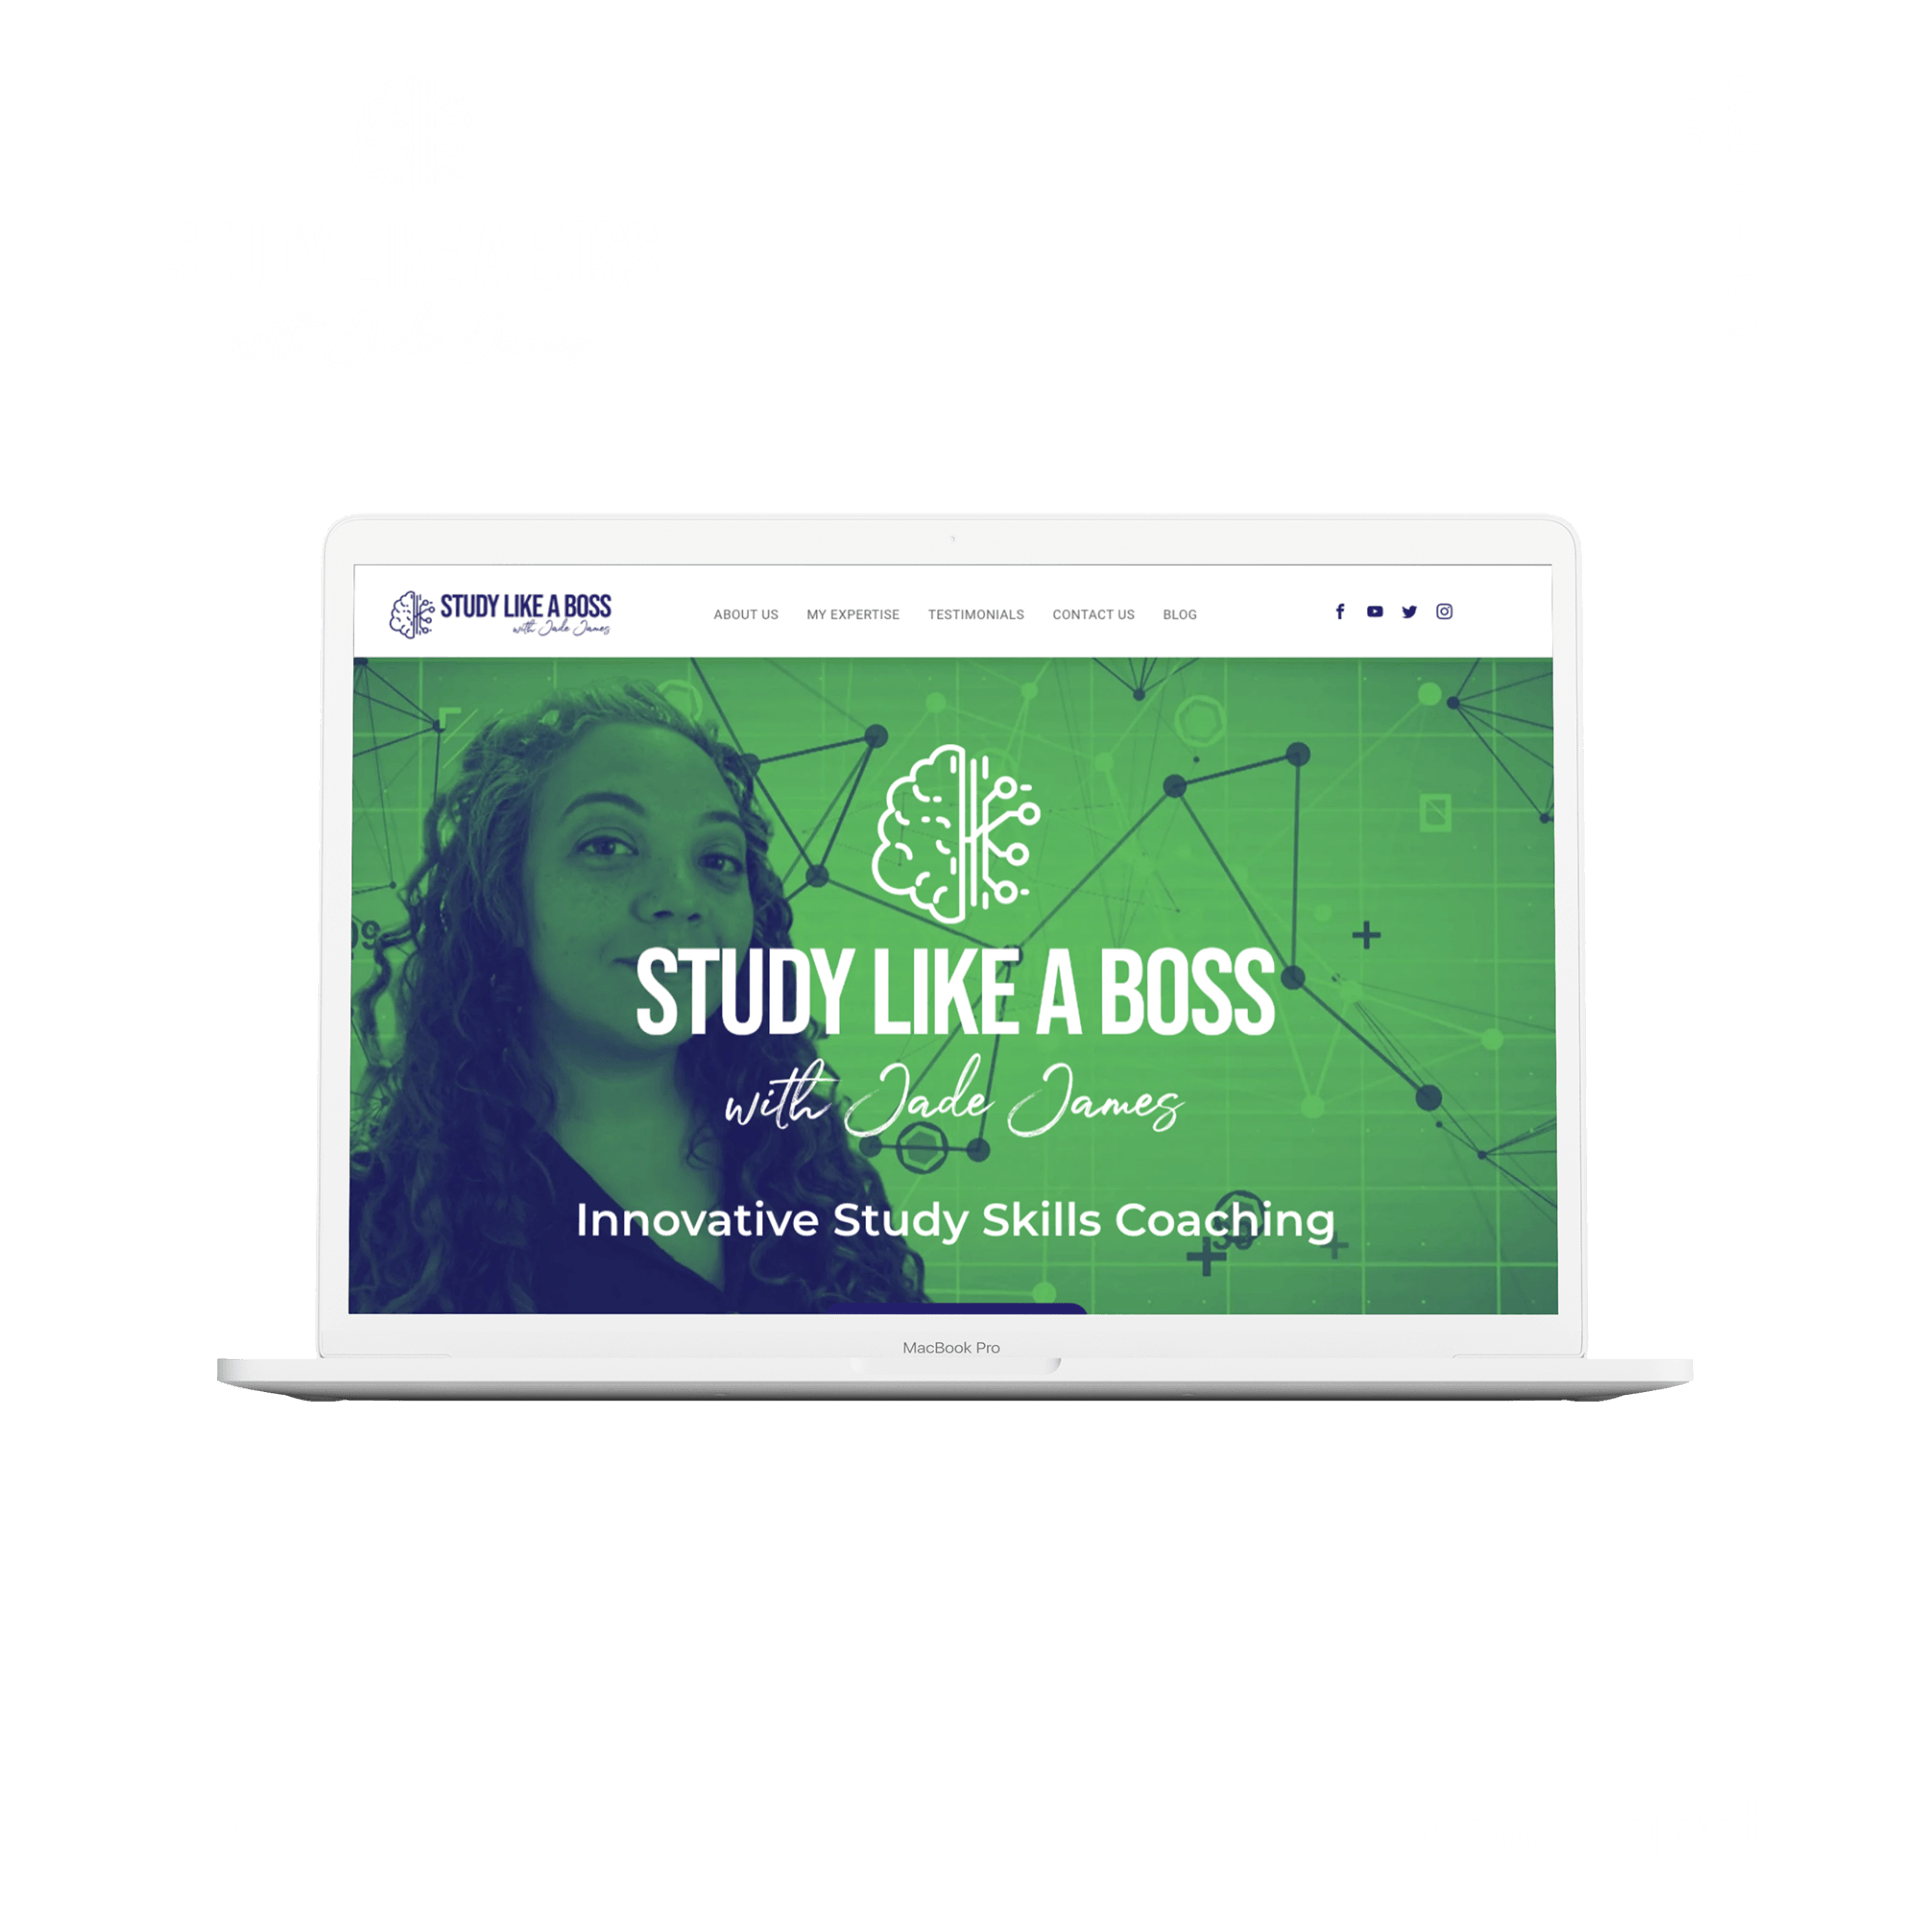 Link to Study Like a Boss case study.